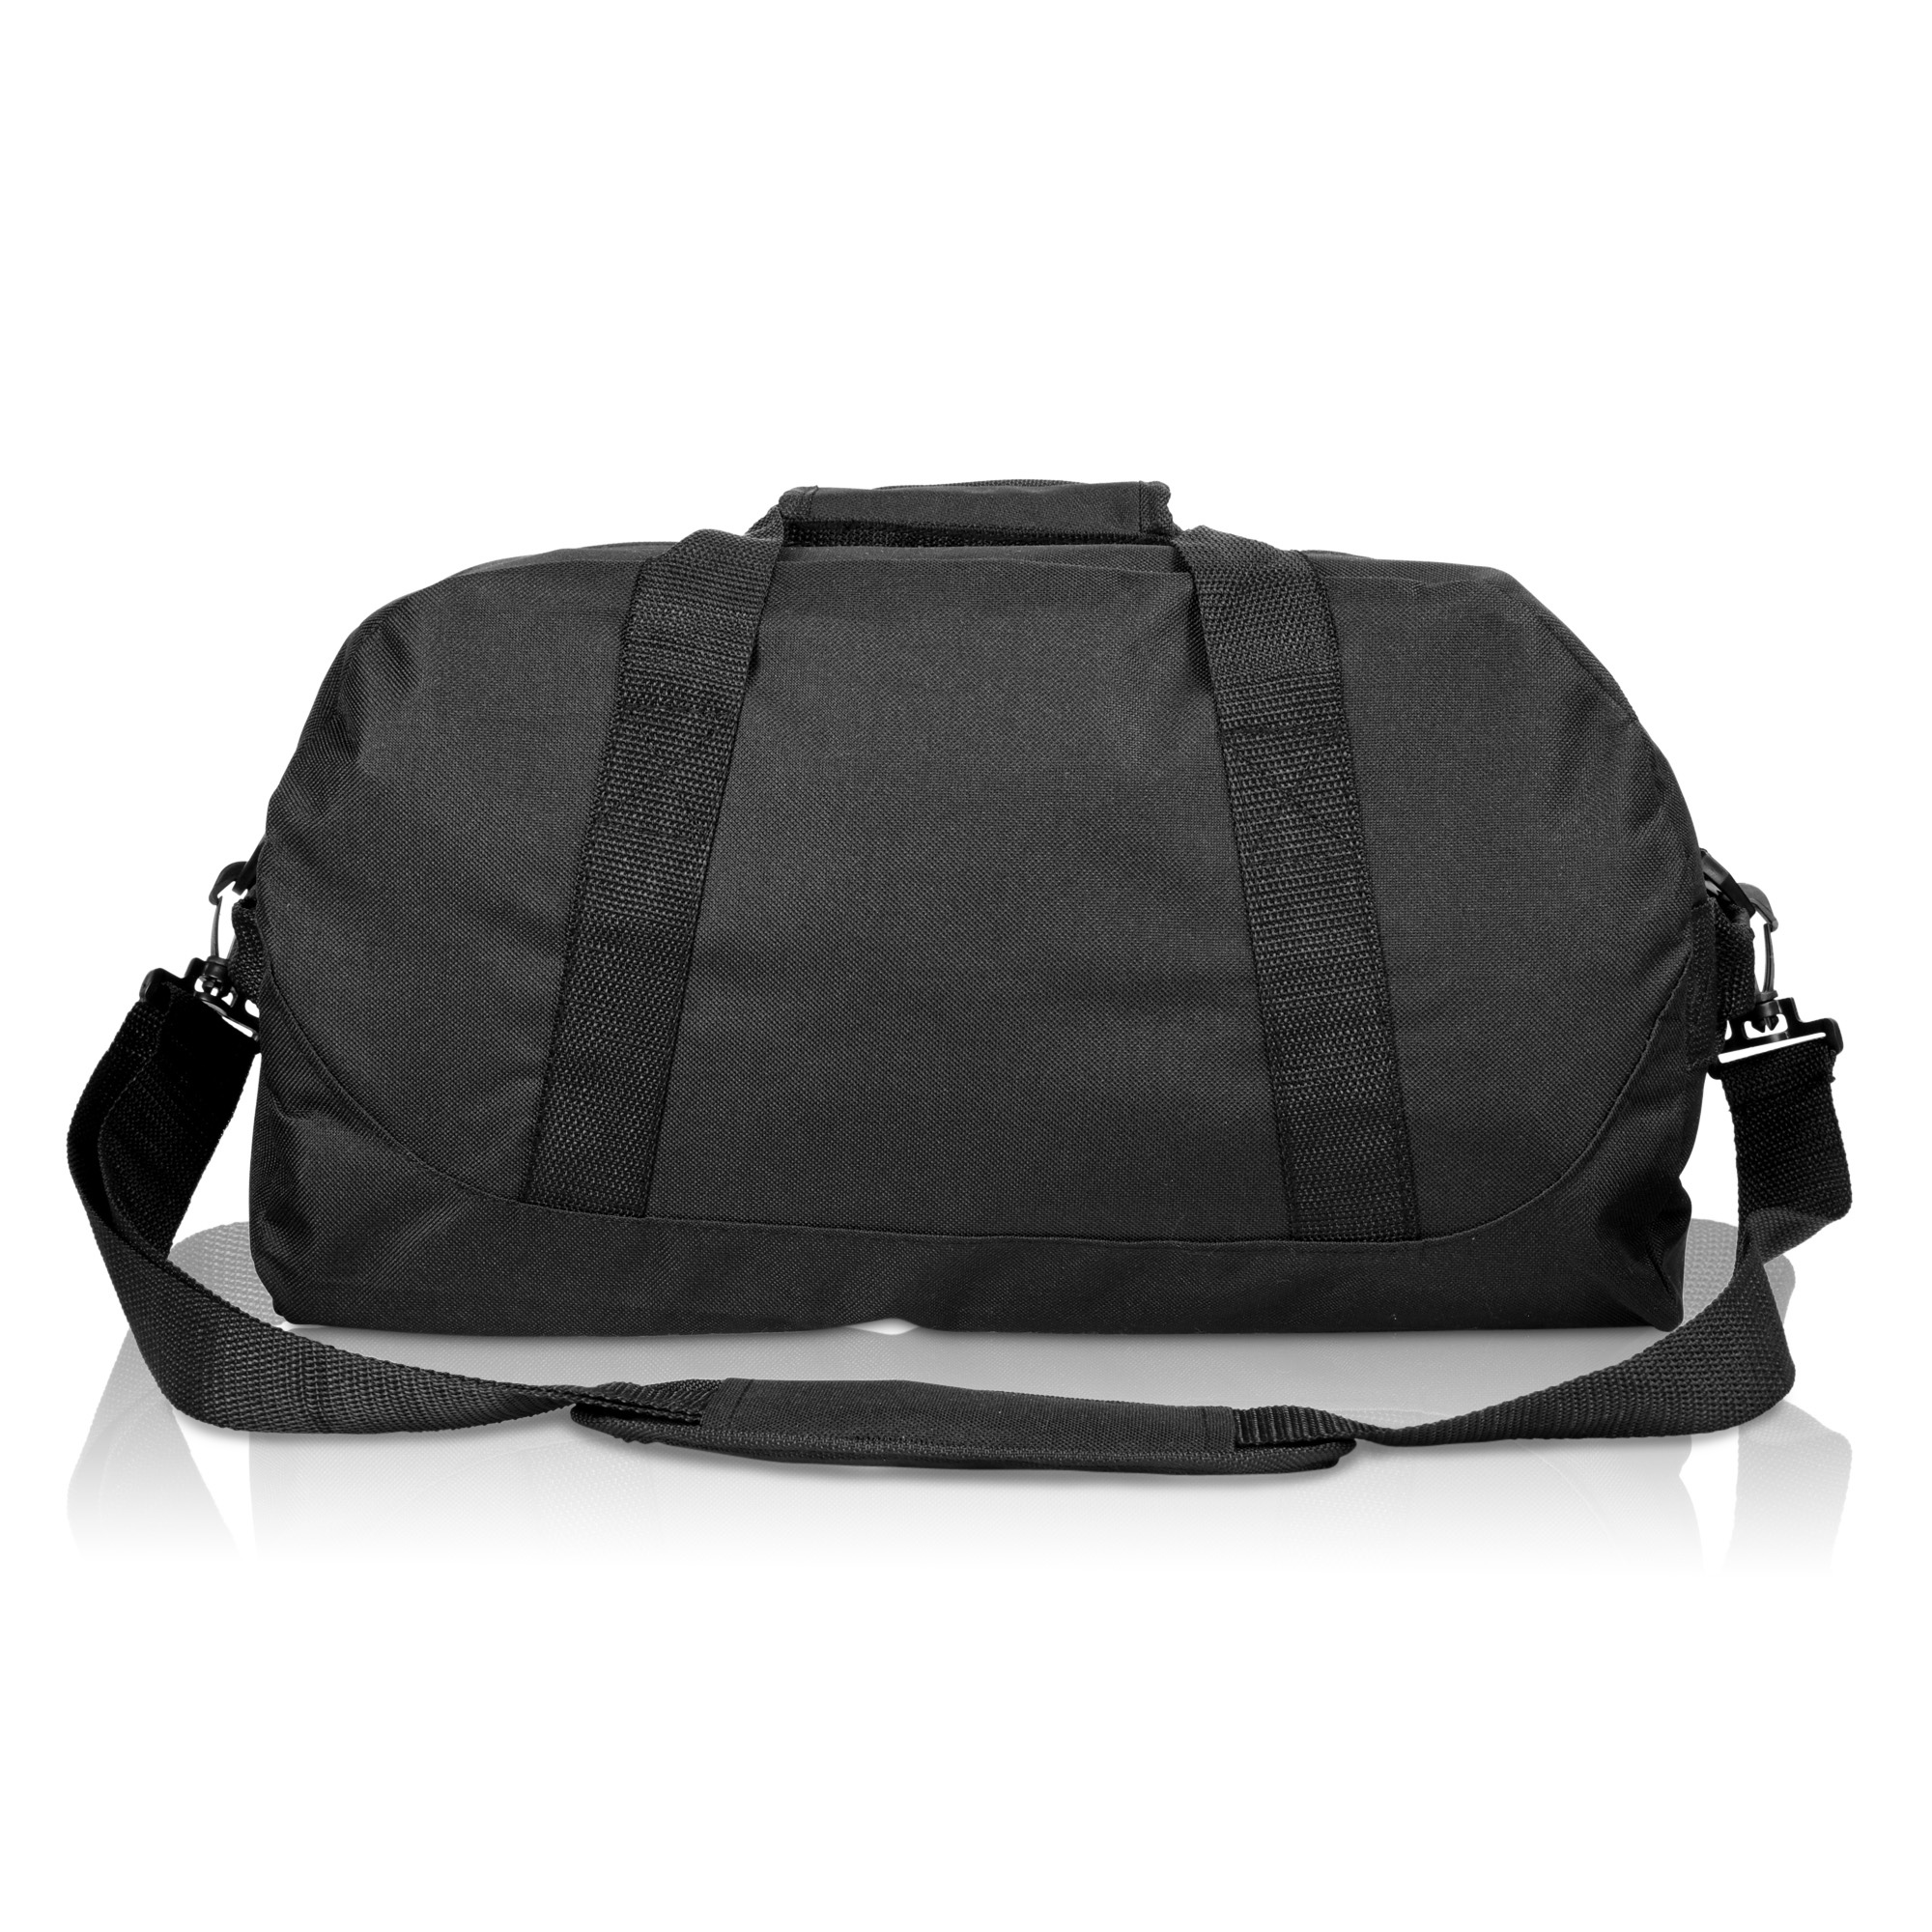 DALIX 18" Duffle Bag Two-Tone Sports Travel Gym Luggage Bag in Black - image 1 of 5